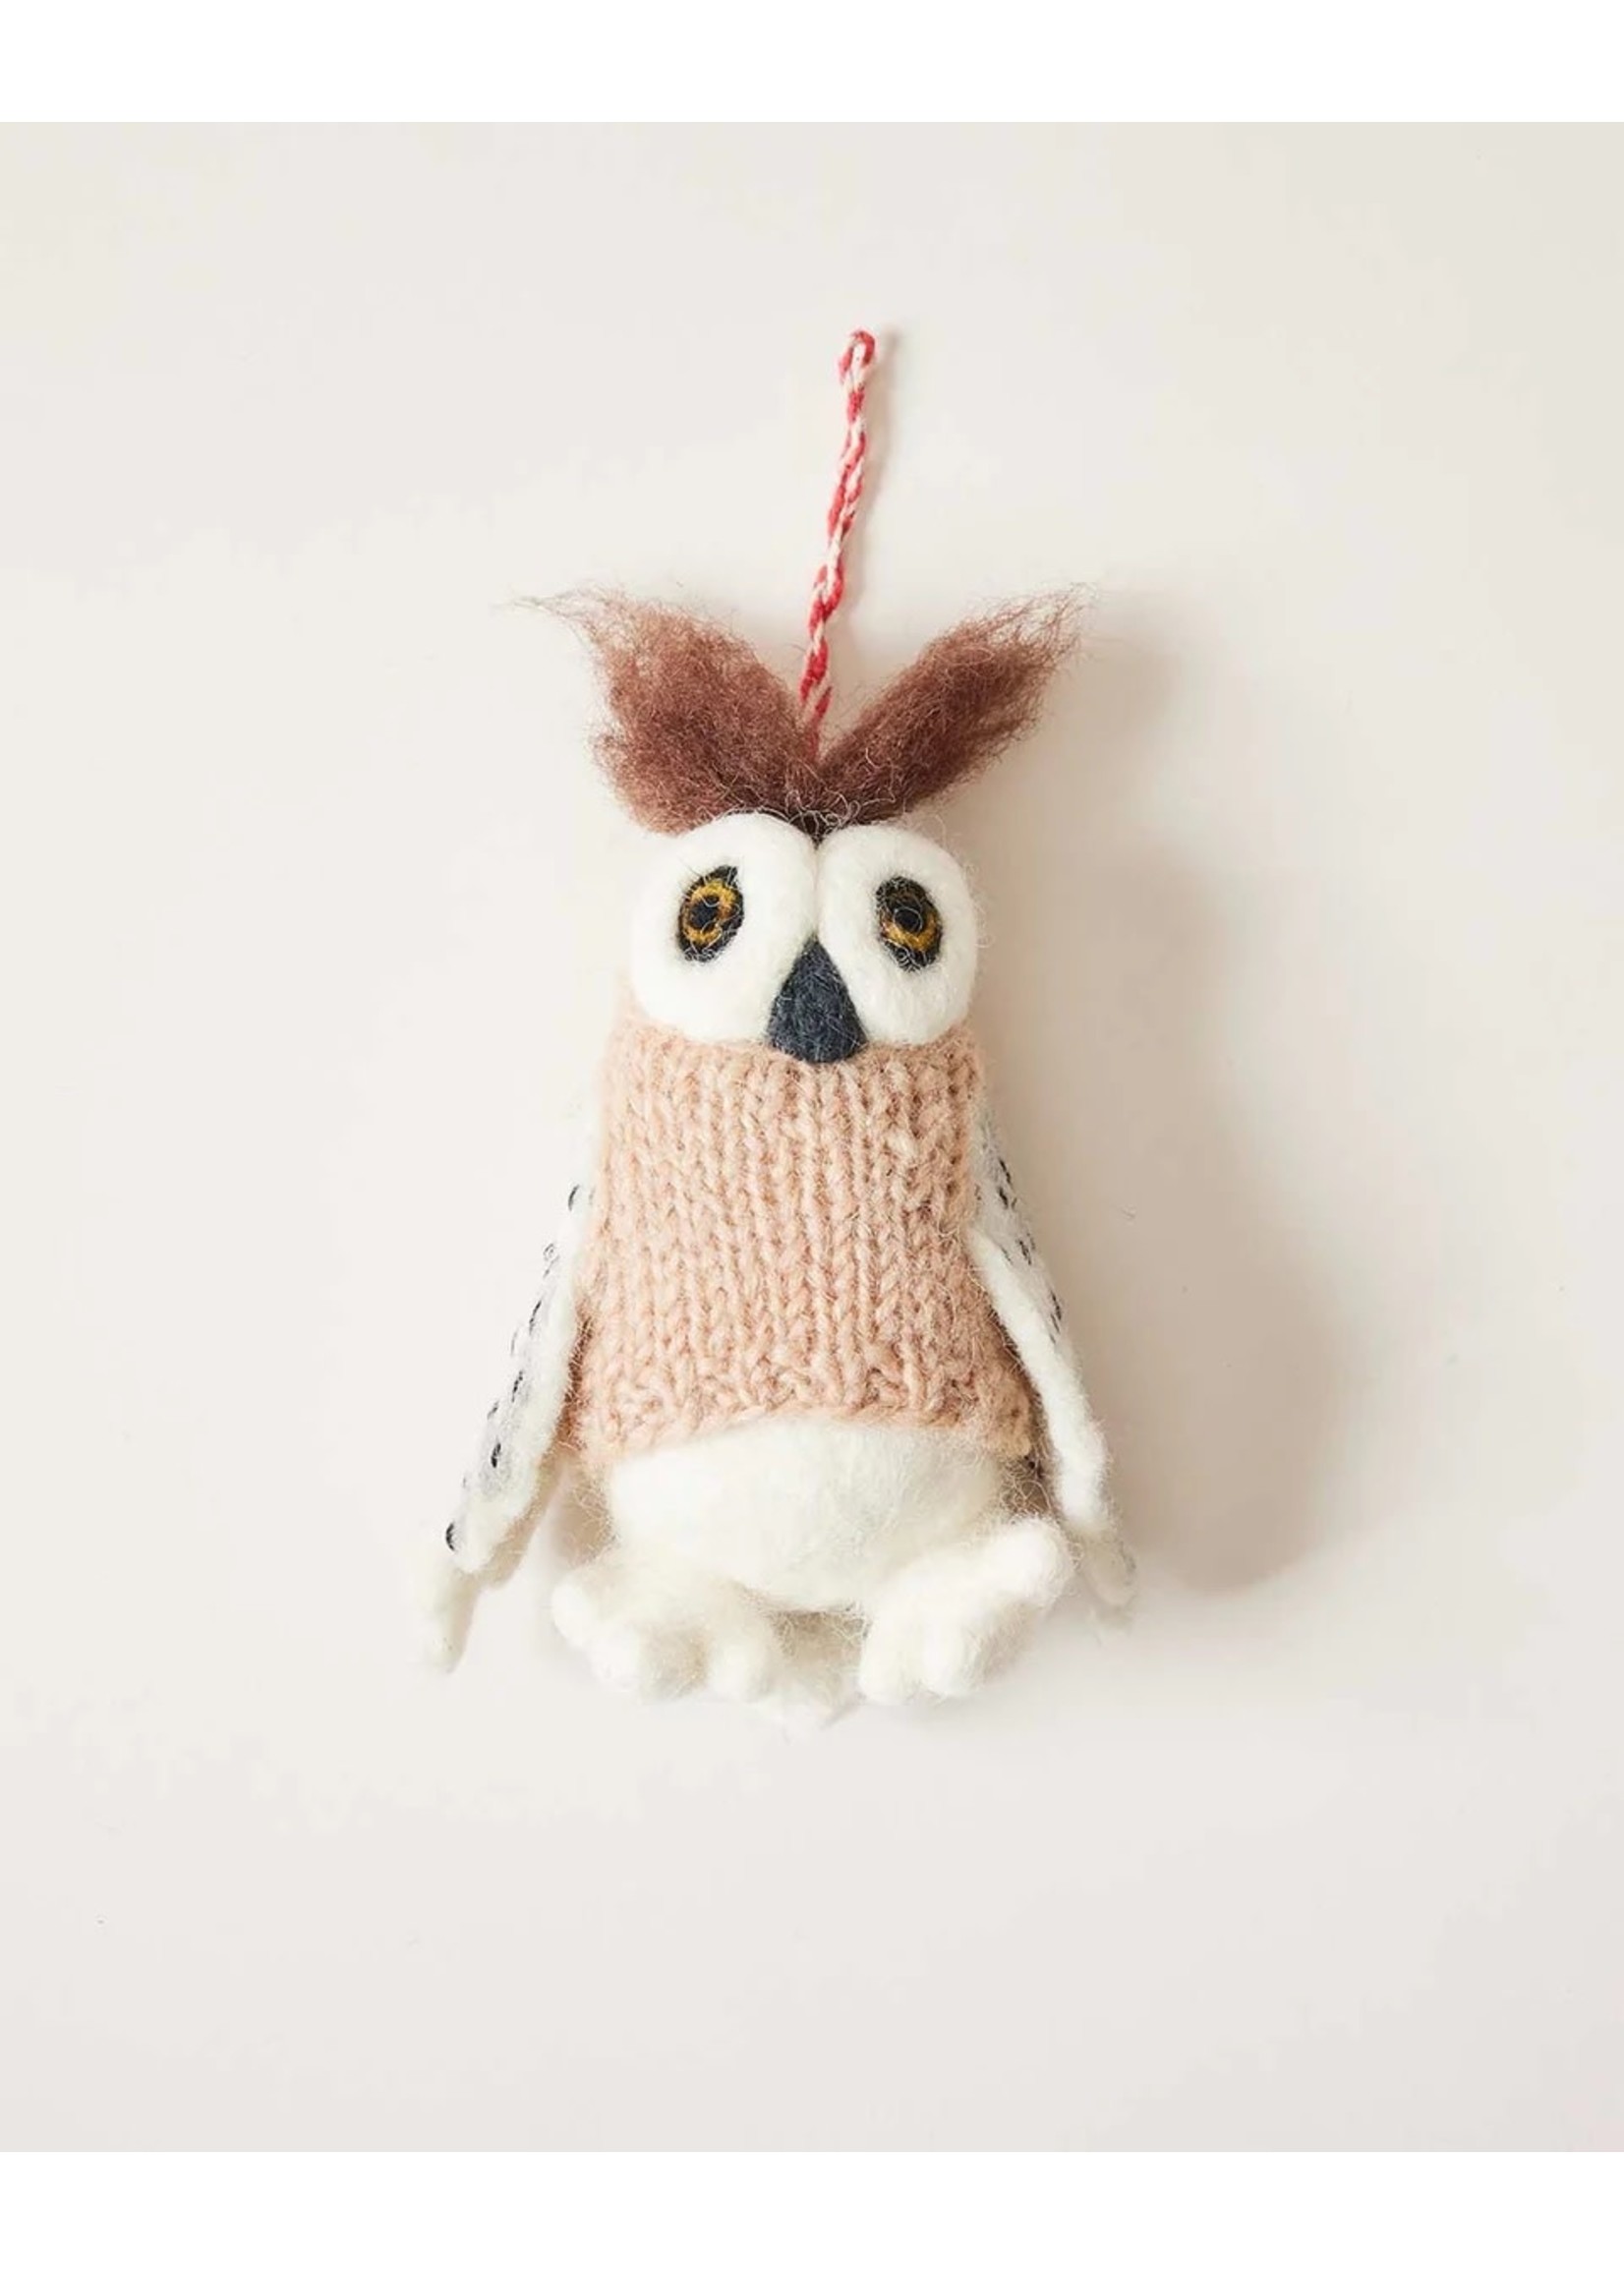 Farmhouse Pottery Ornament - Oliver the Owl